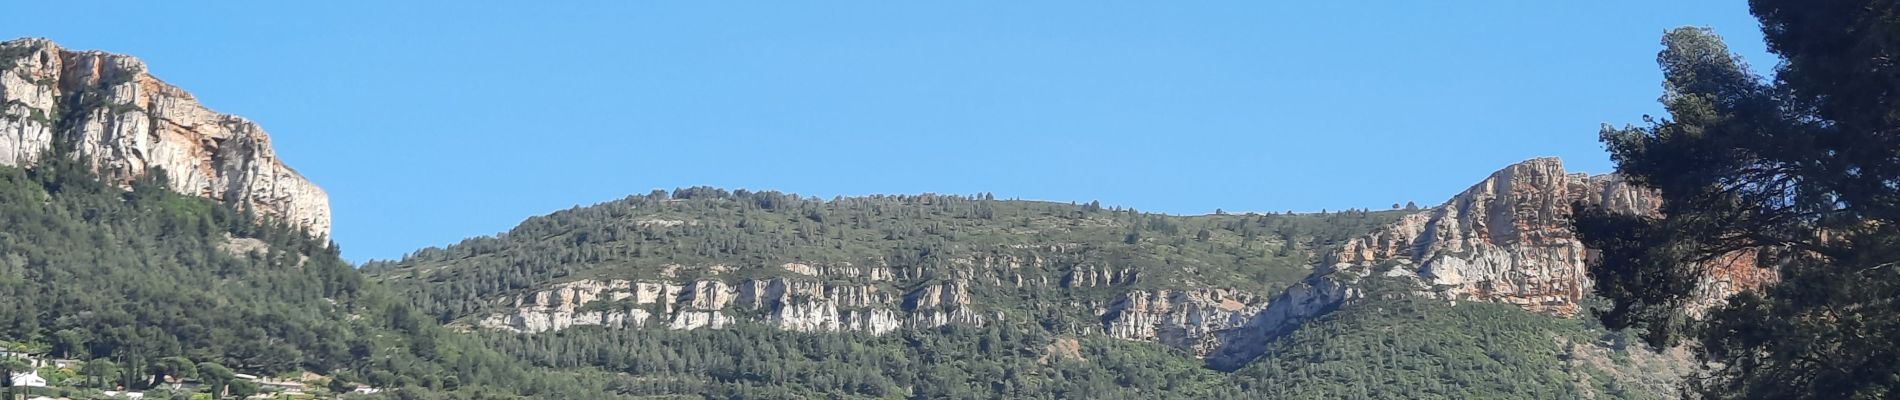 Randonnée Marche La Ciotat - la ciotat - cassis par les cretes - Photo